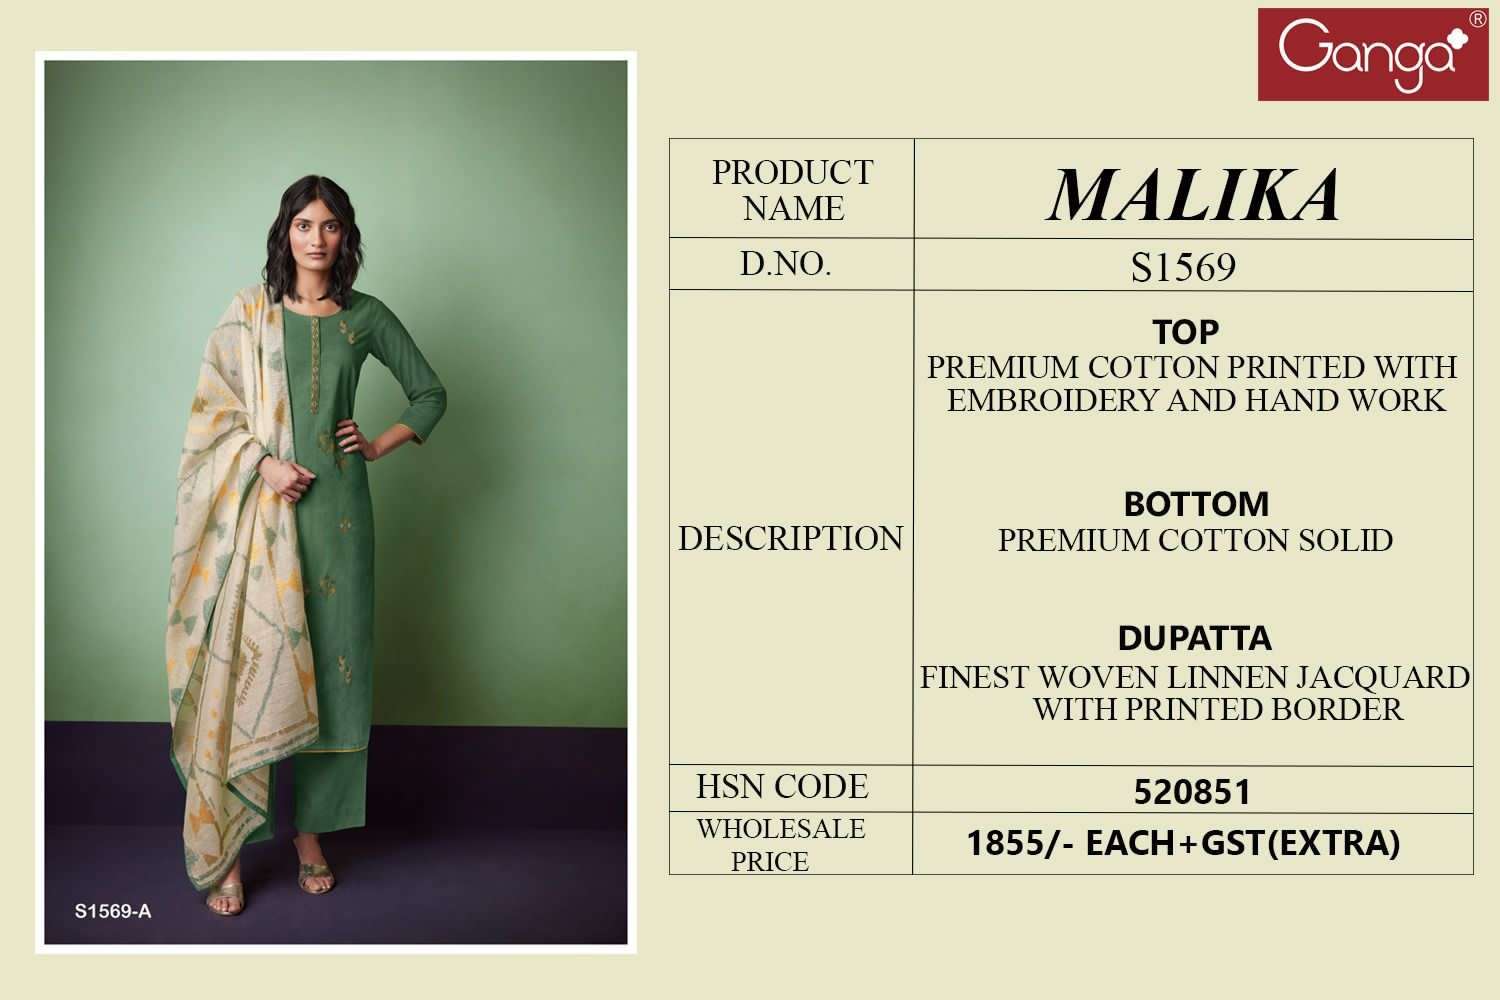 ganga malika 1569 premium cotton designer unstich salwar kameez wholesale price 